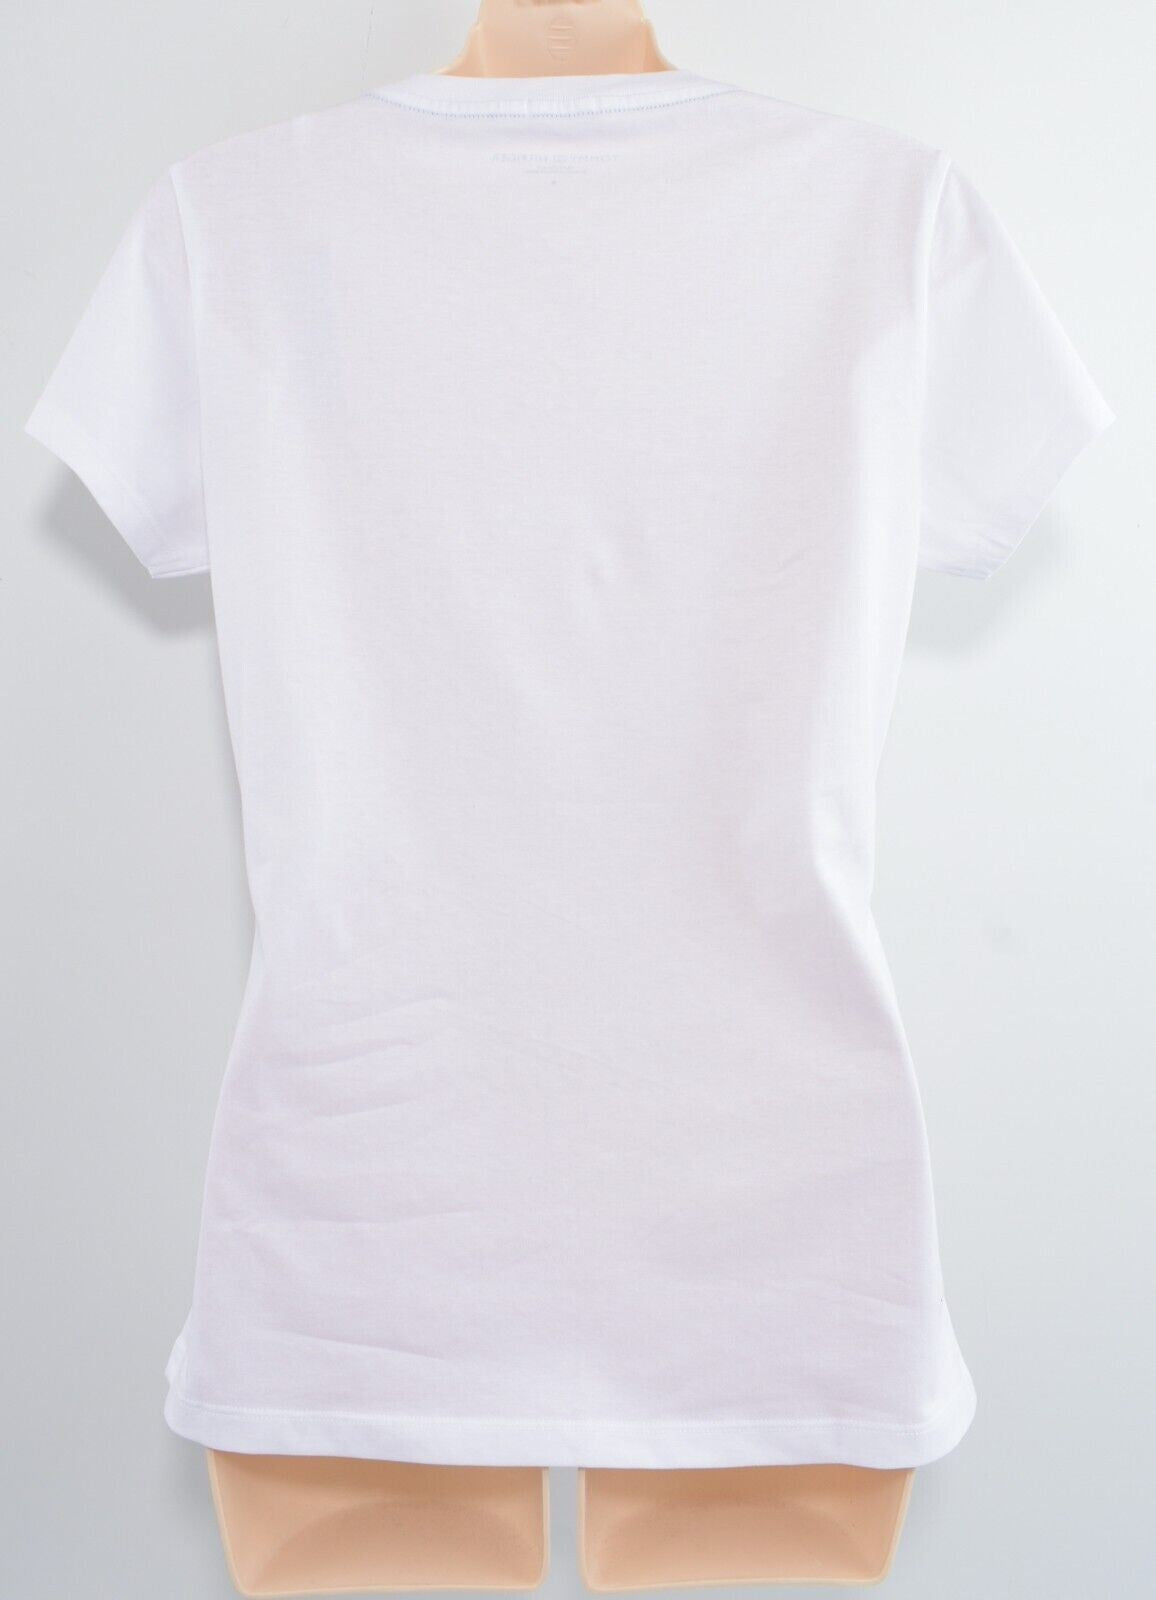 TOMMY HILFIGER Women's ORGANIC COTTON Logo T-shirt, White, size S (UK 10)